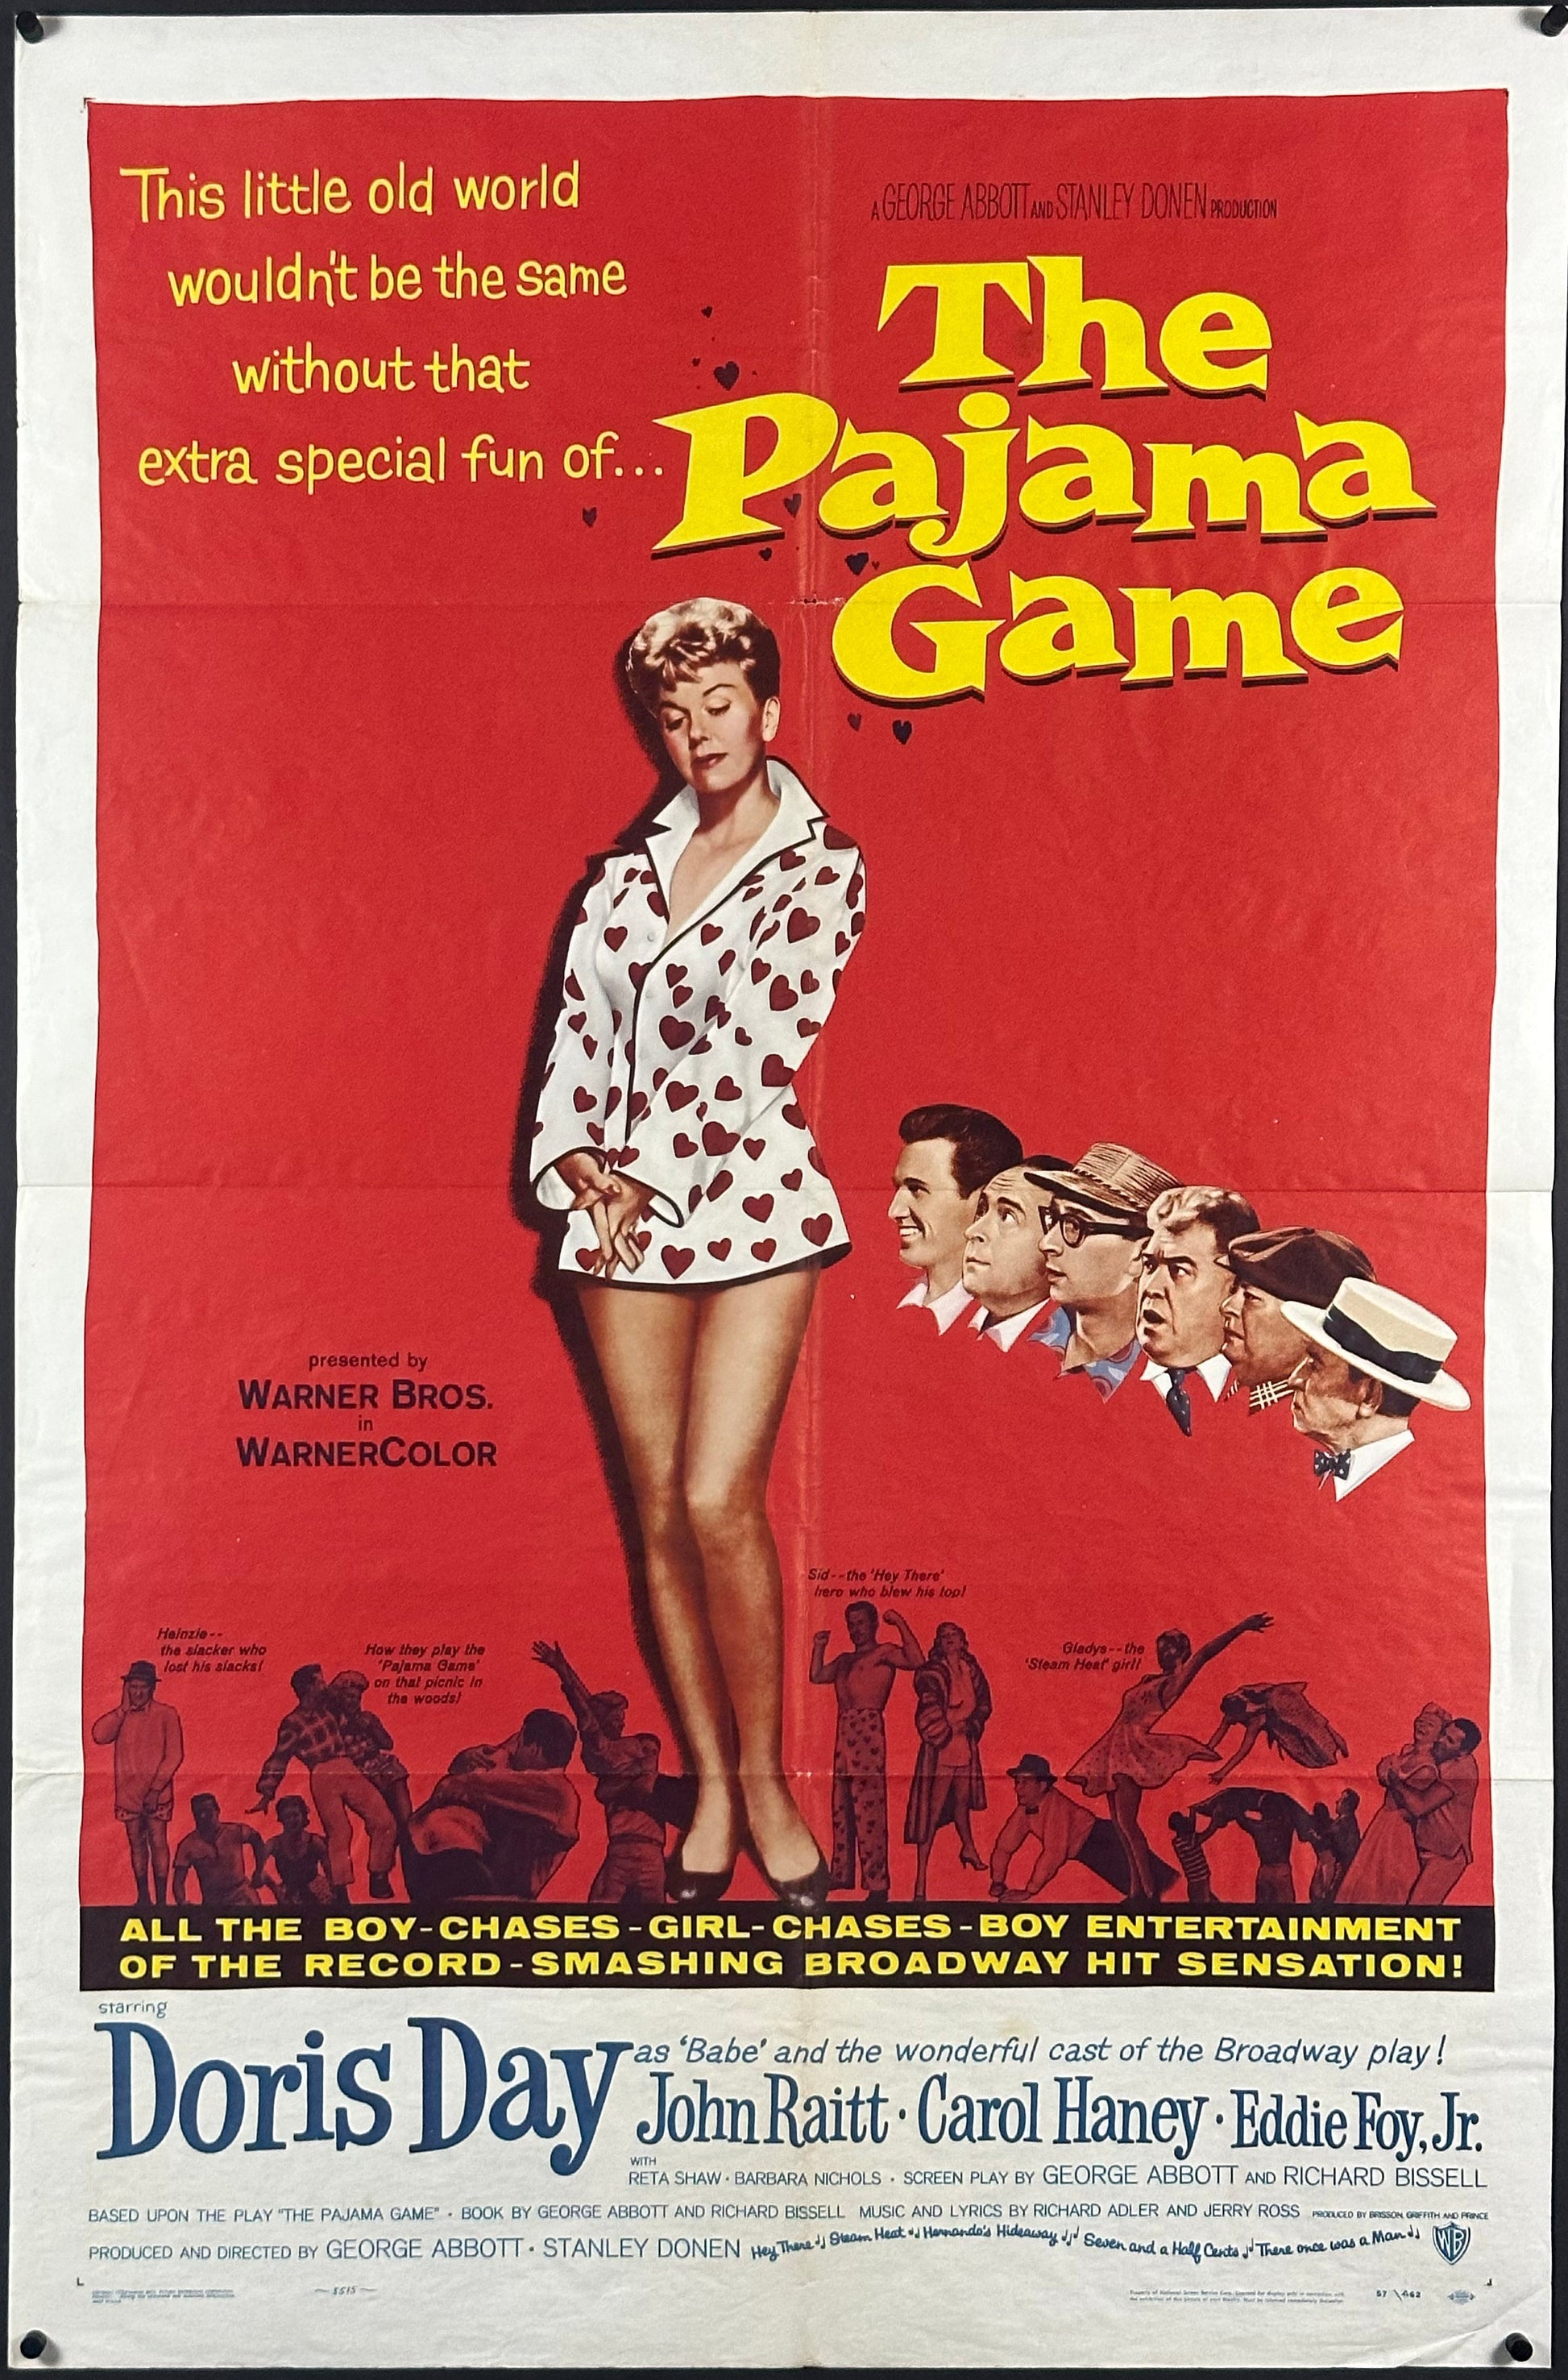 The Pajama Game - posterpalace.com